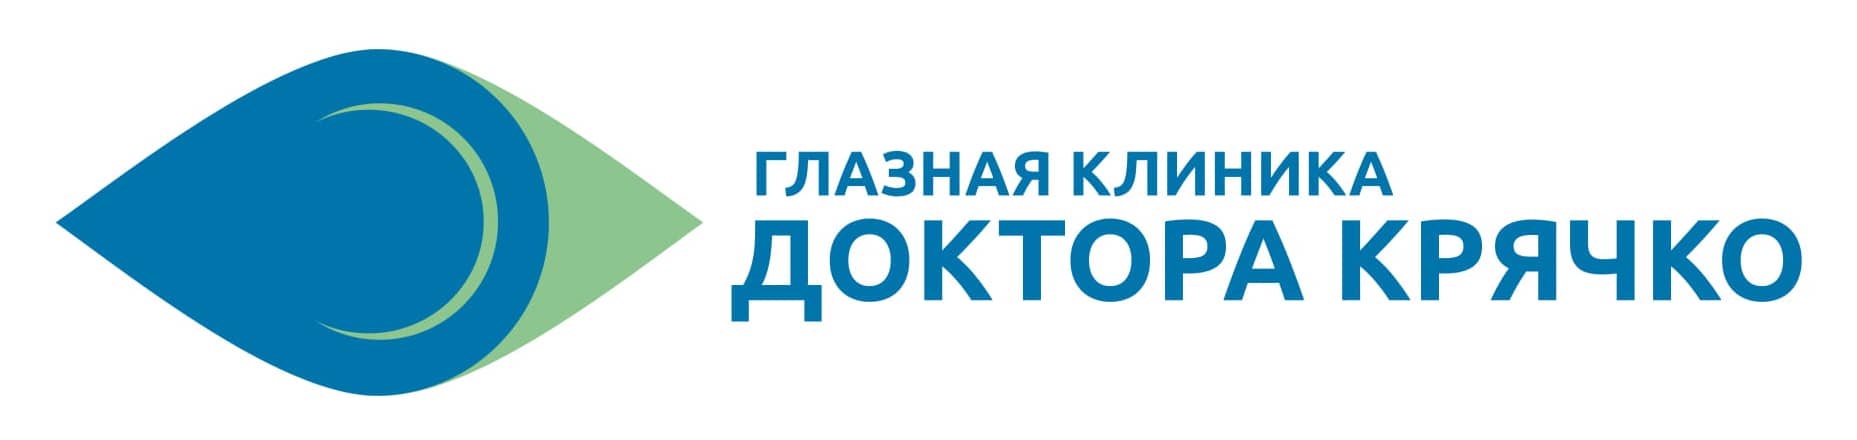 Логотип клиники доктора Крячко